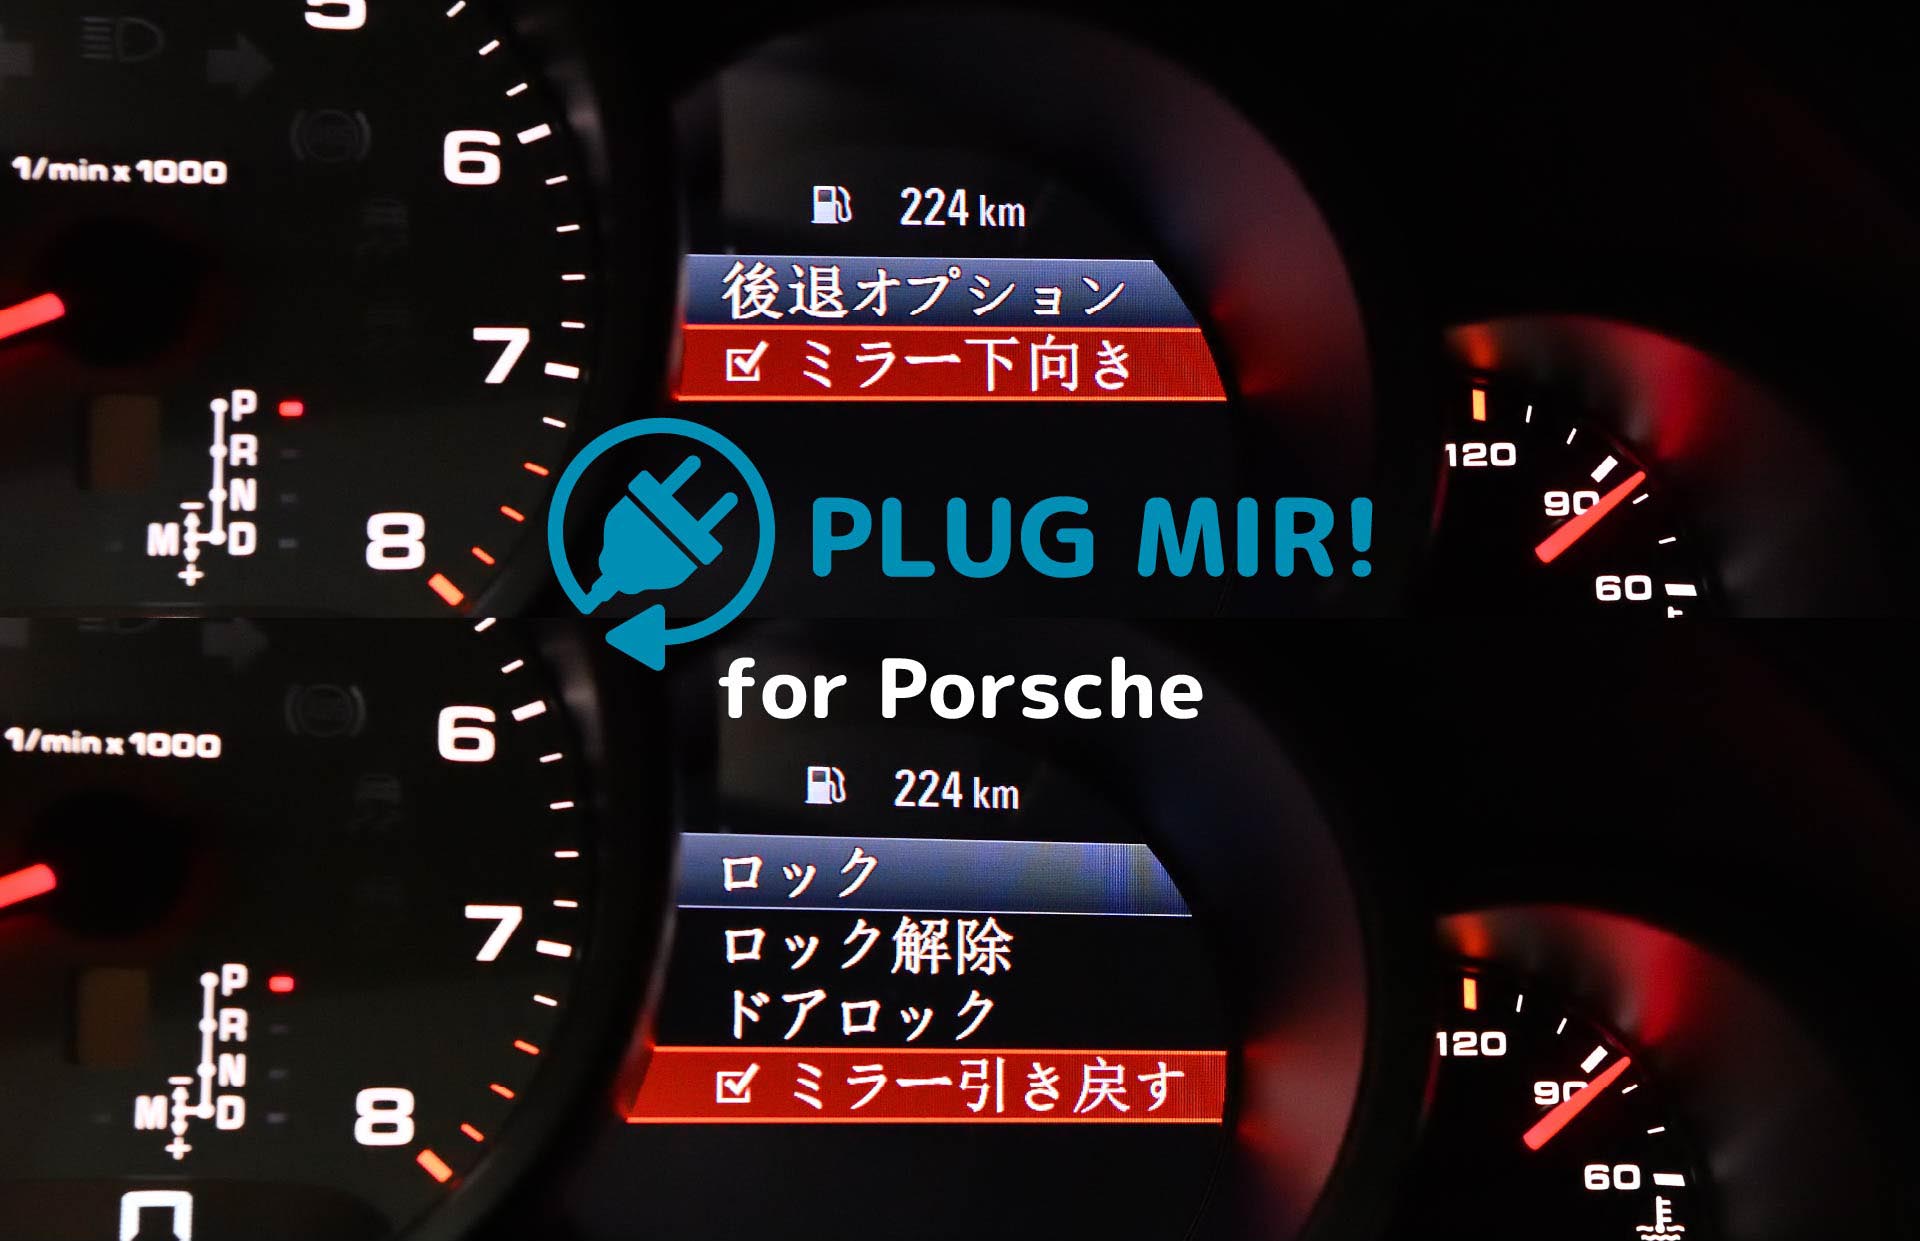 PLUG MIR for Porsche